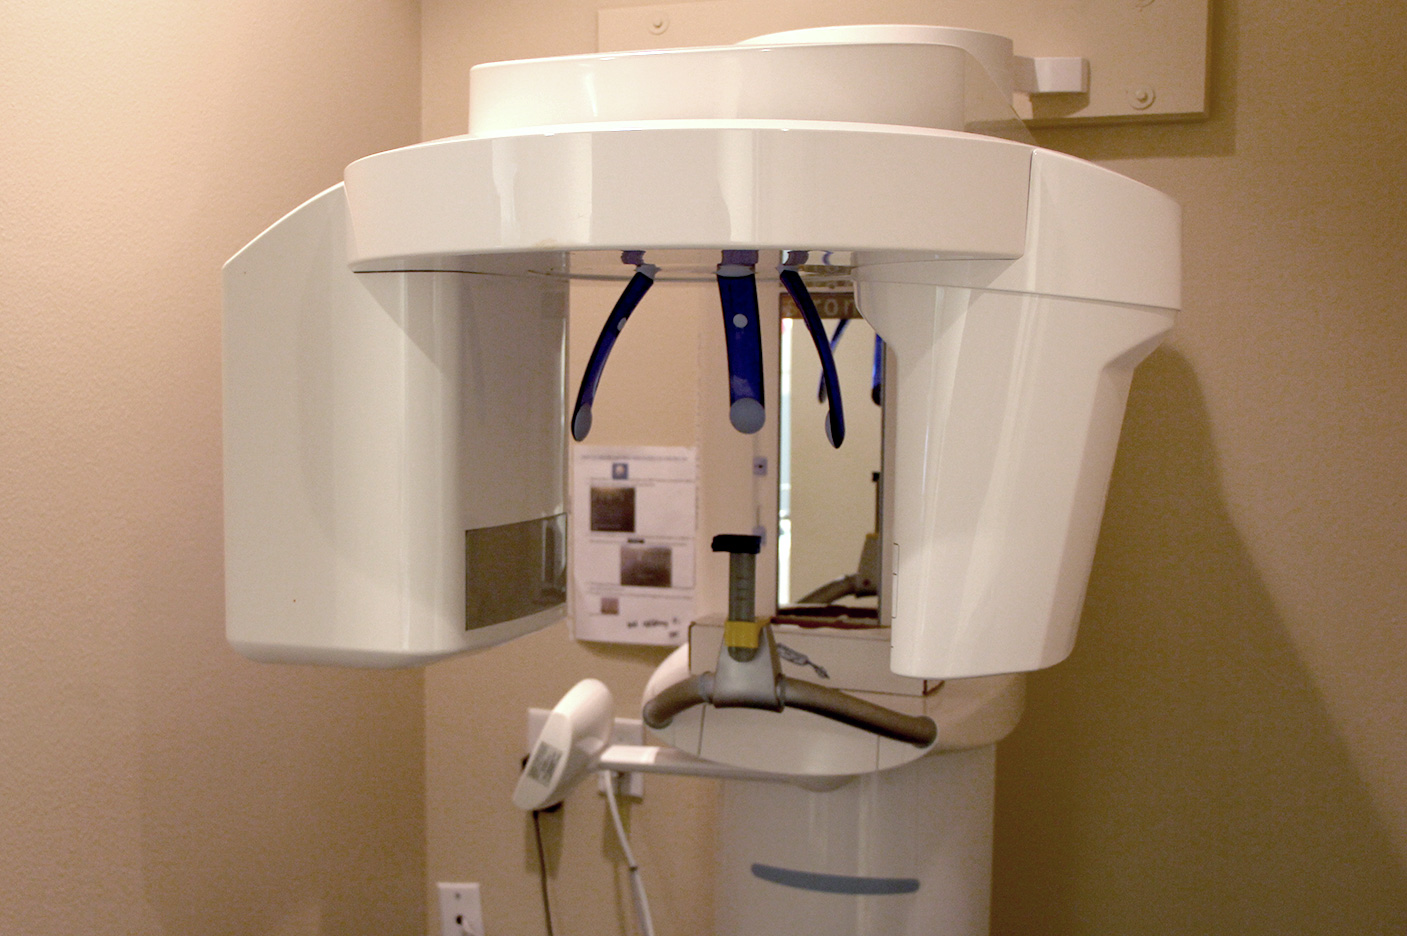 3d cone beam CT scan equipment